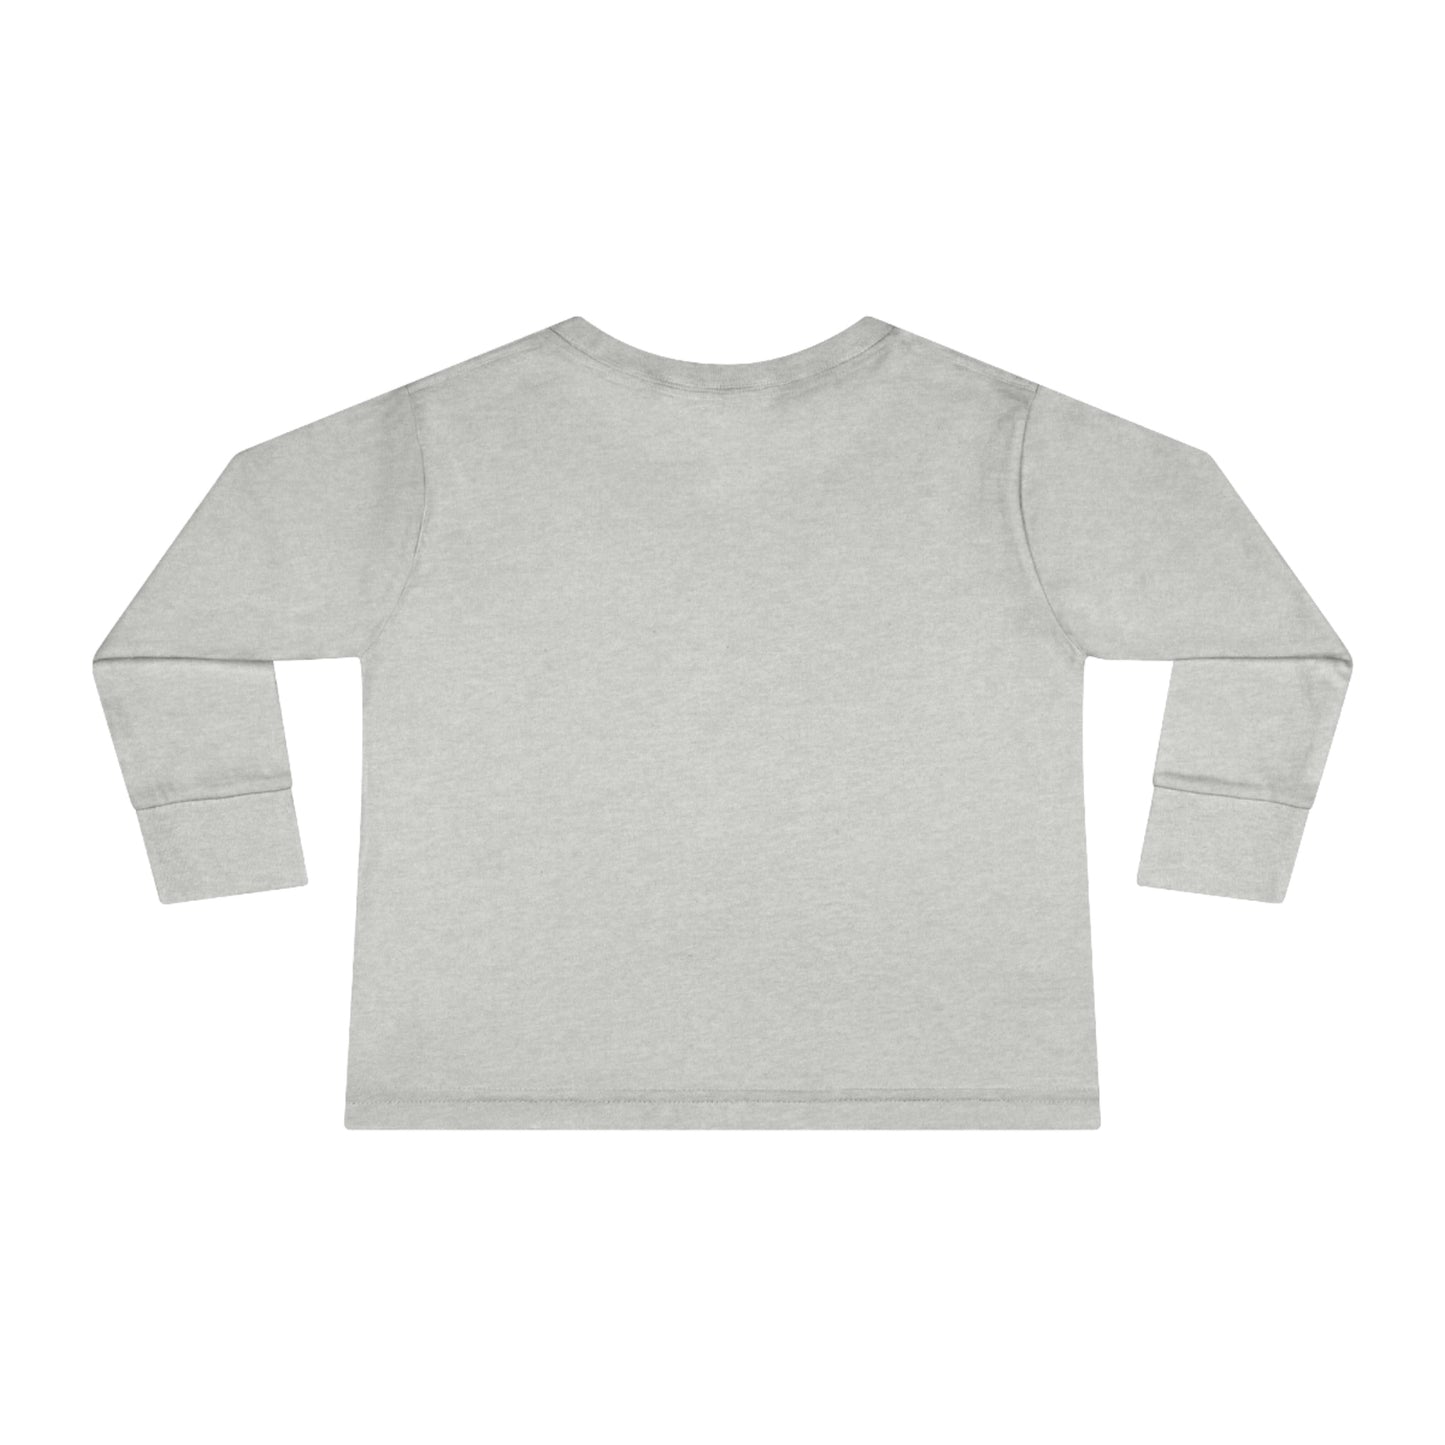 Toddler Long Sleeve Shirt | QCRFC Frogs Logo